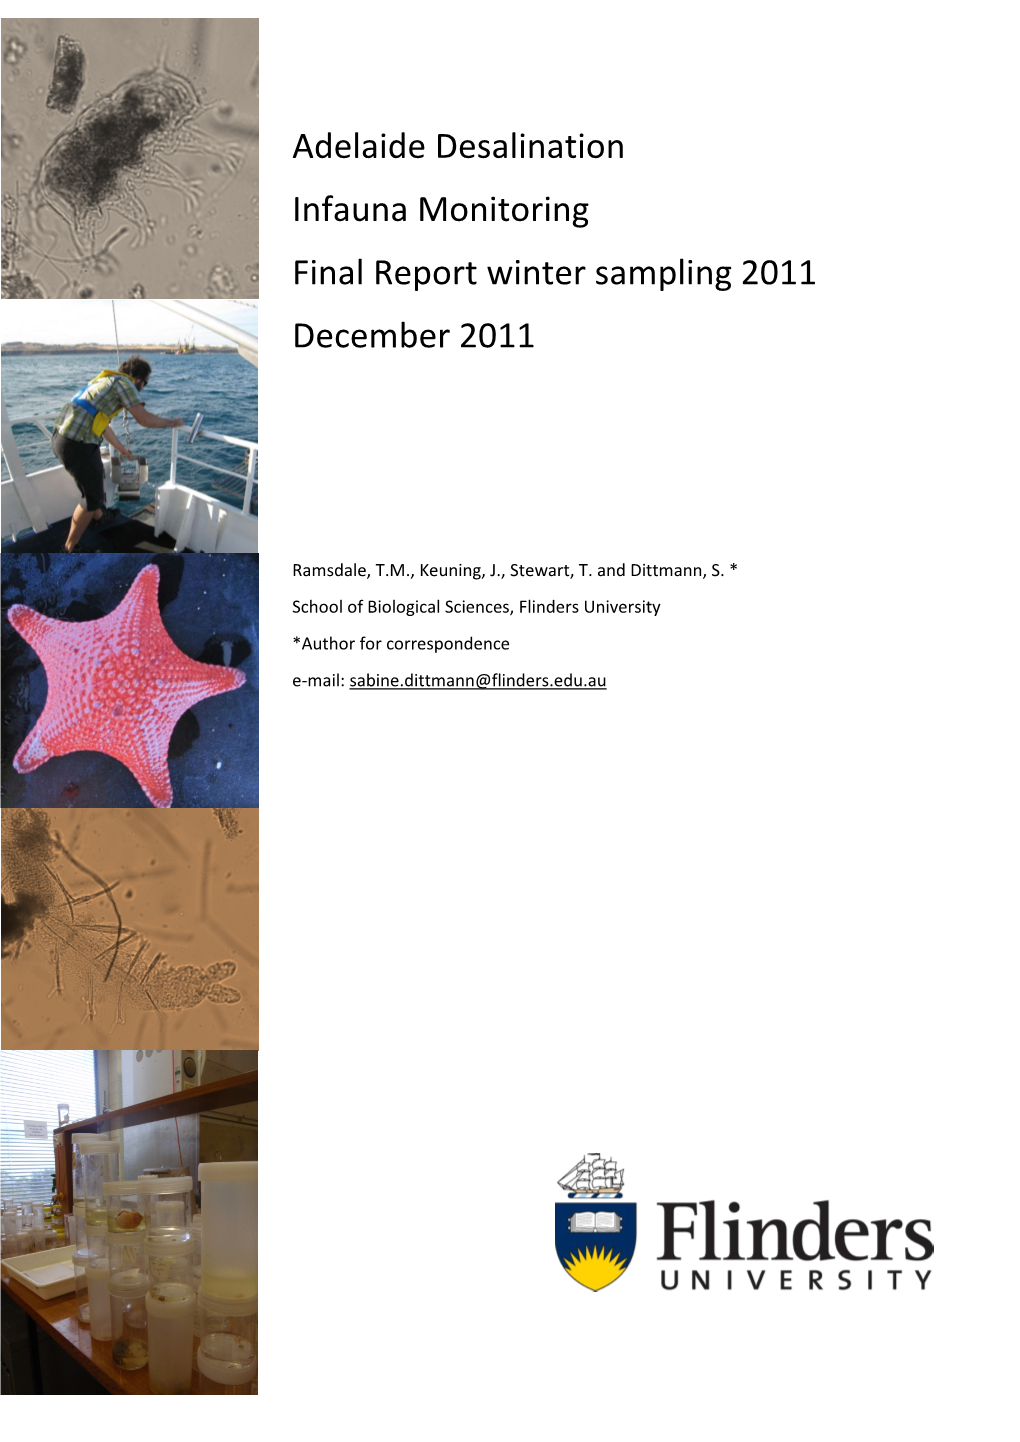 Adelaide Desalination Infauna Monitoring Final Report Winter Sampling 2011 December 2011